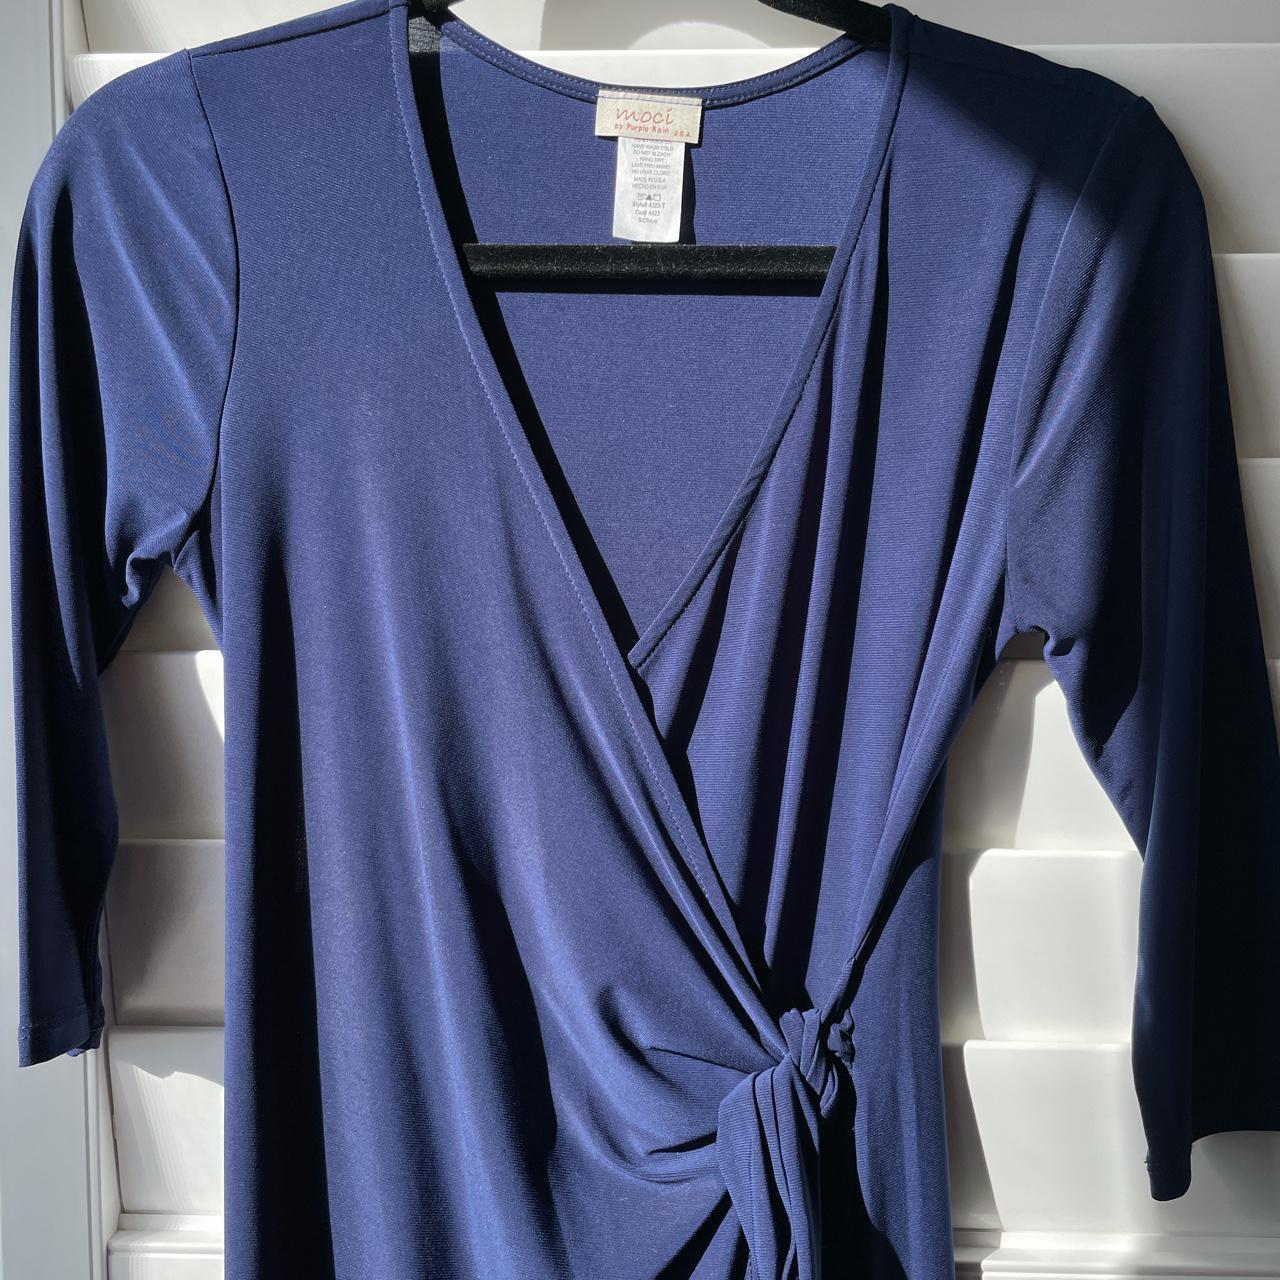 Product Image 4 - Navy/Dark blue mini wrap dress.